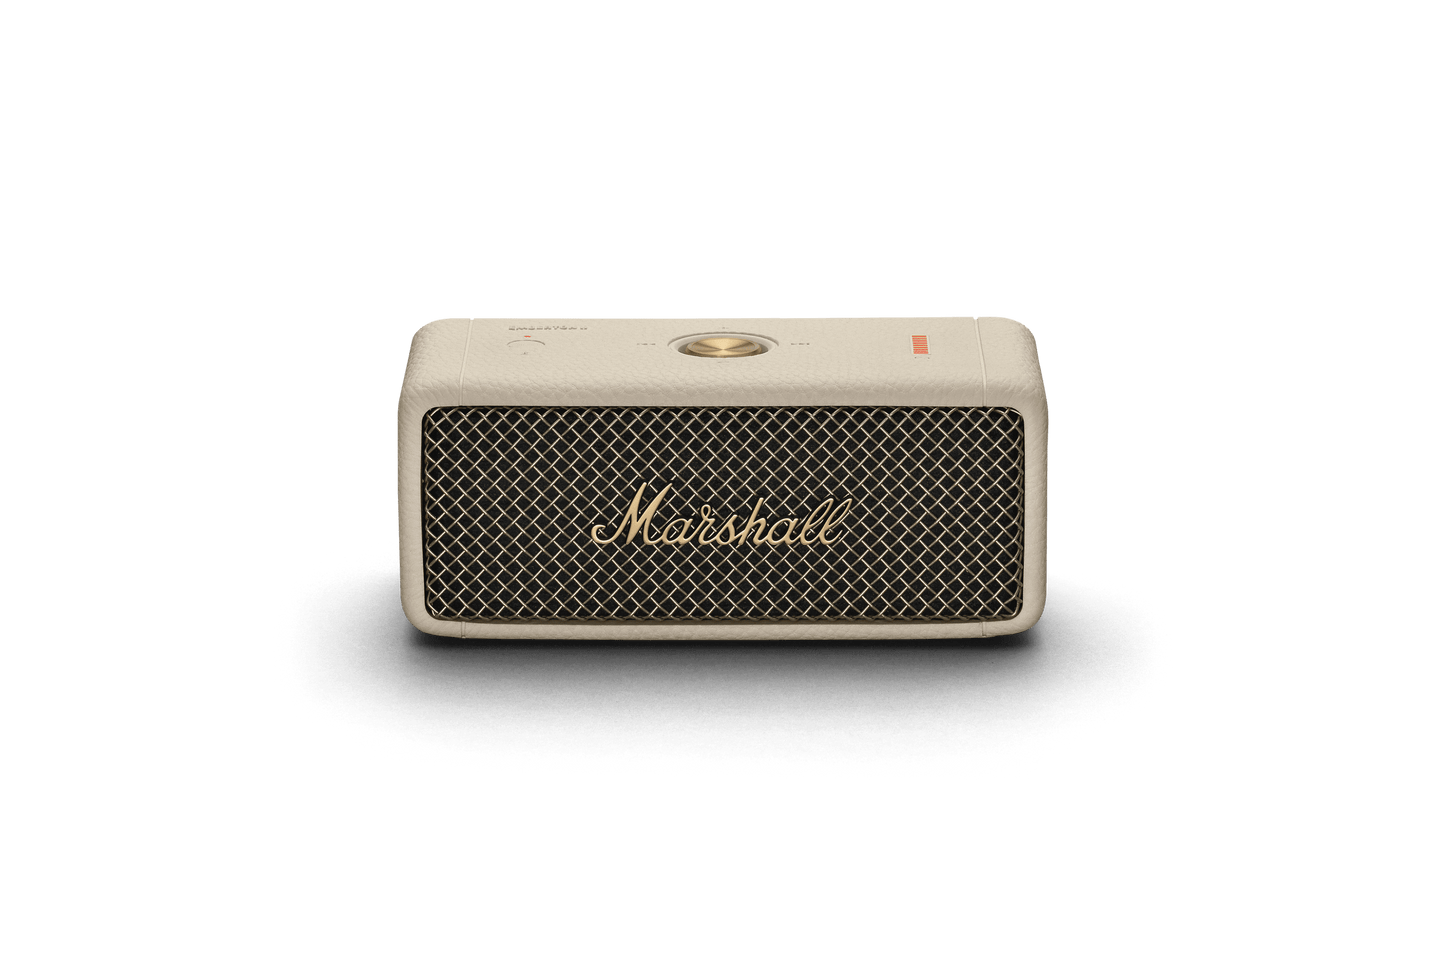 Marshall Emberton 2 Portable Bluetooth Speaker Cream